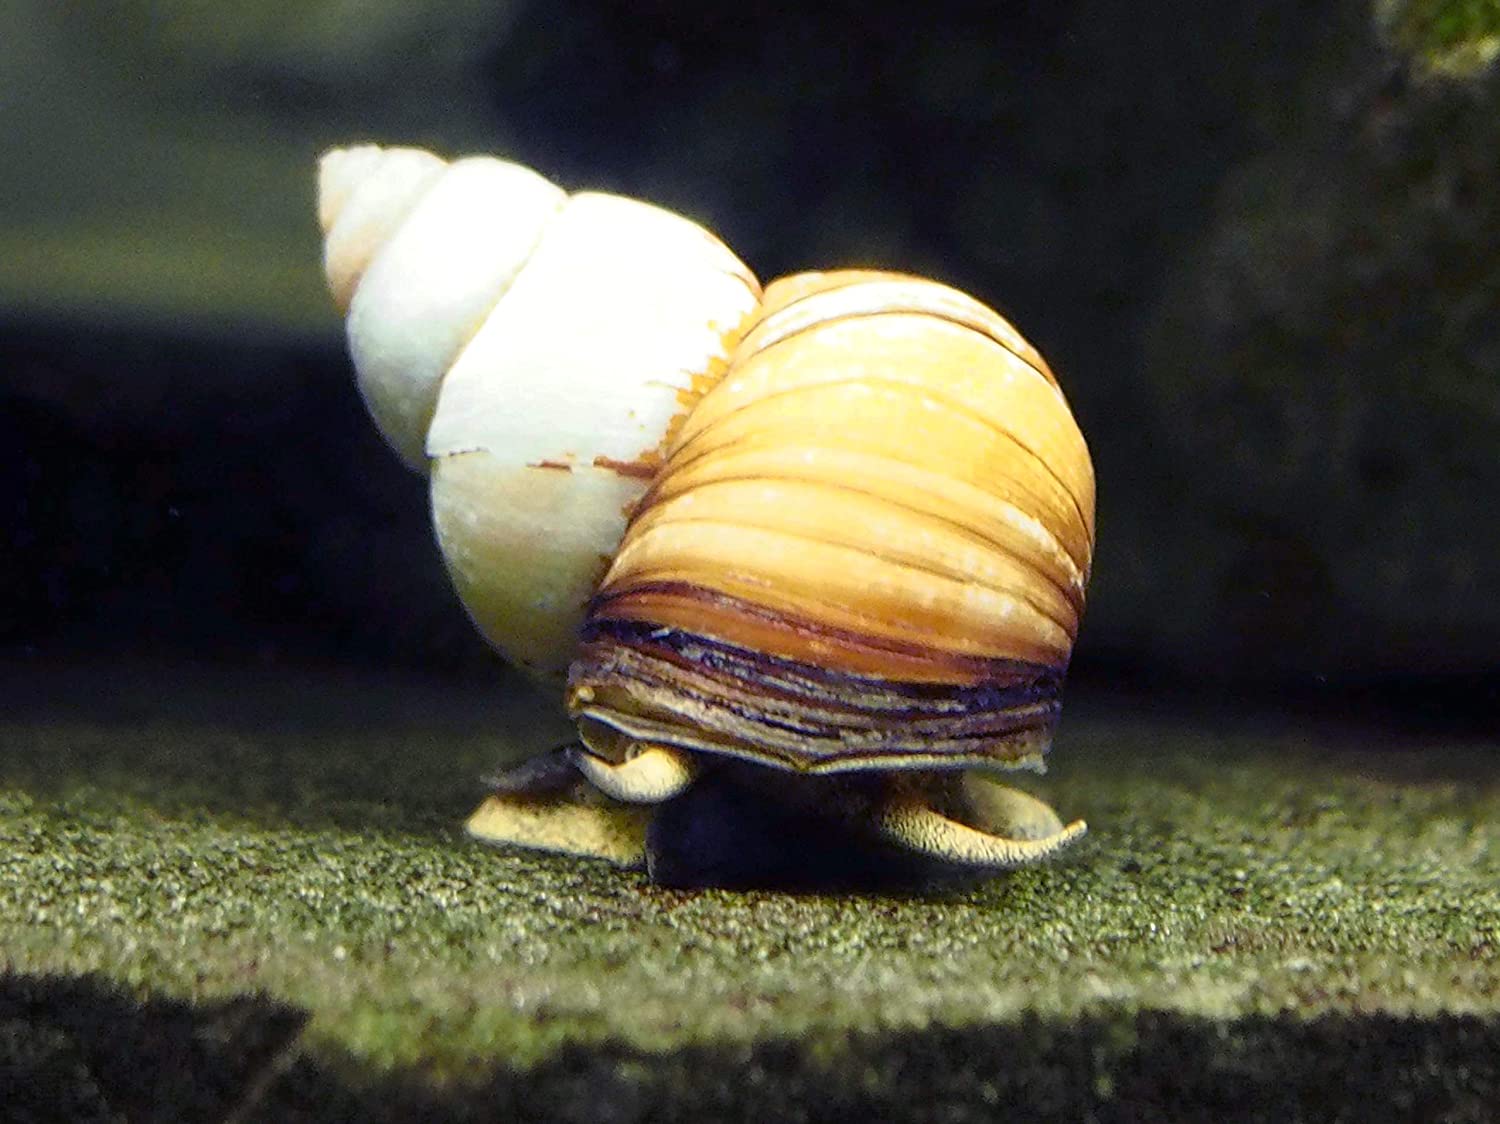 Japanese Trapdoor Snails 